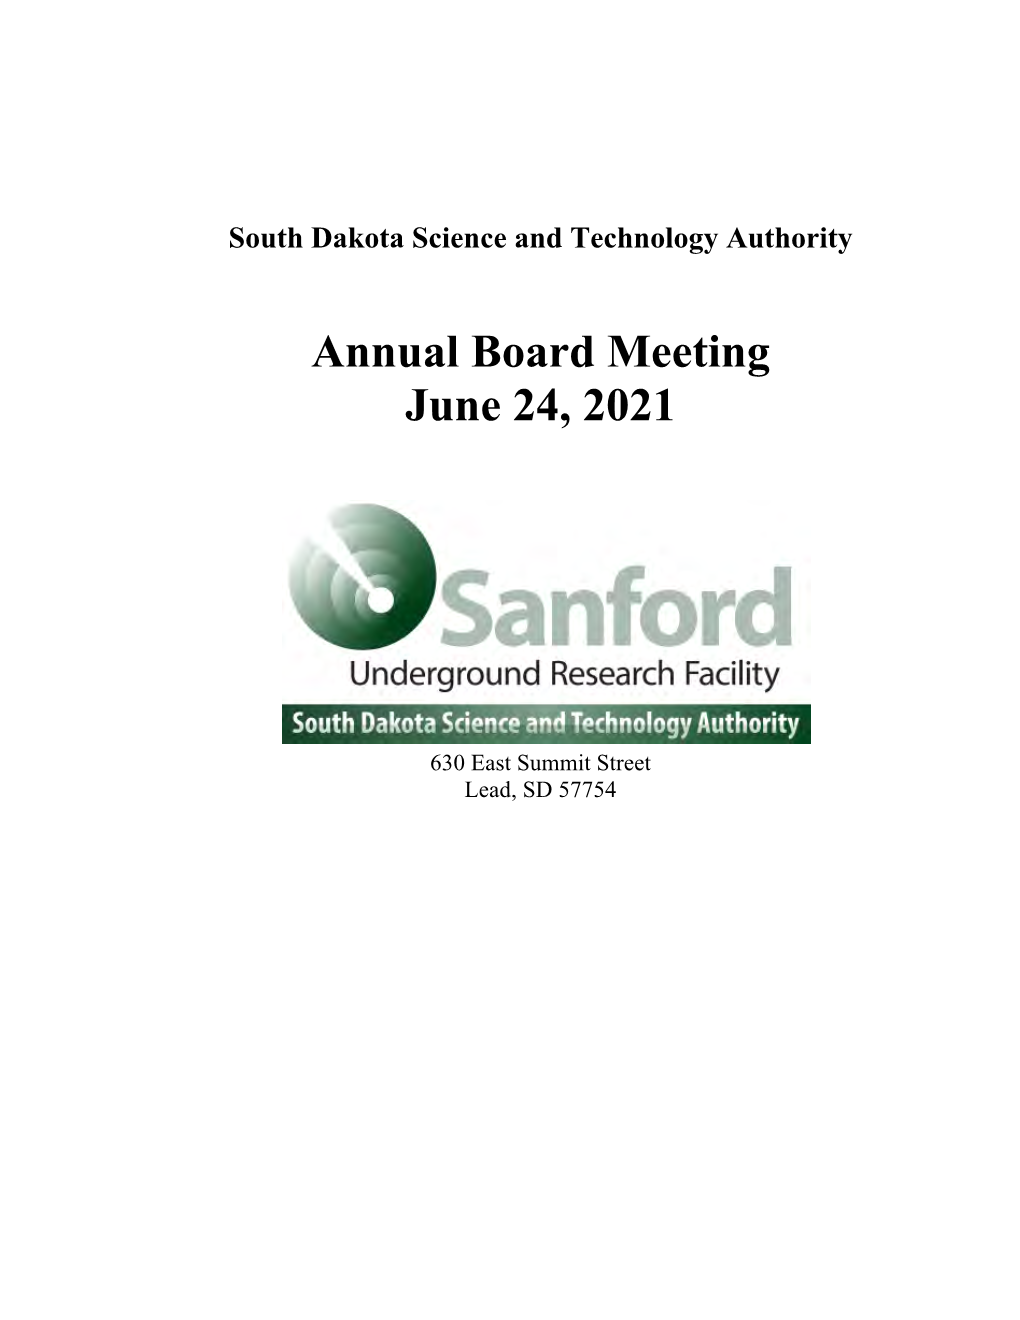 Annual Board Meeting June 24, 2021